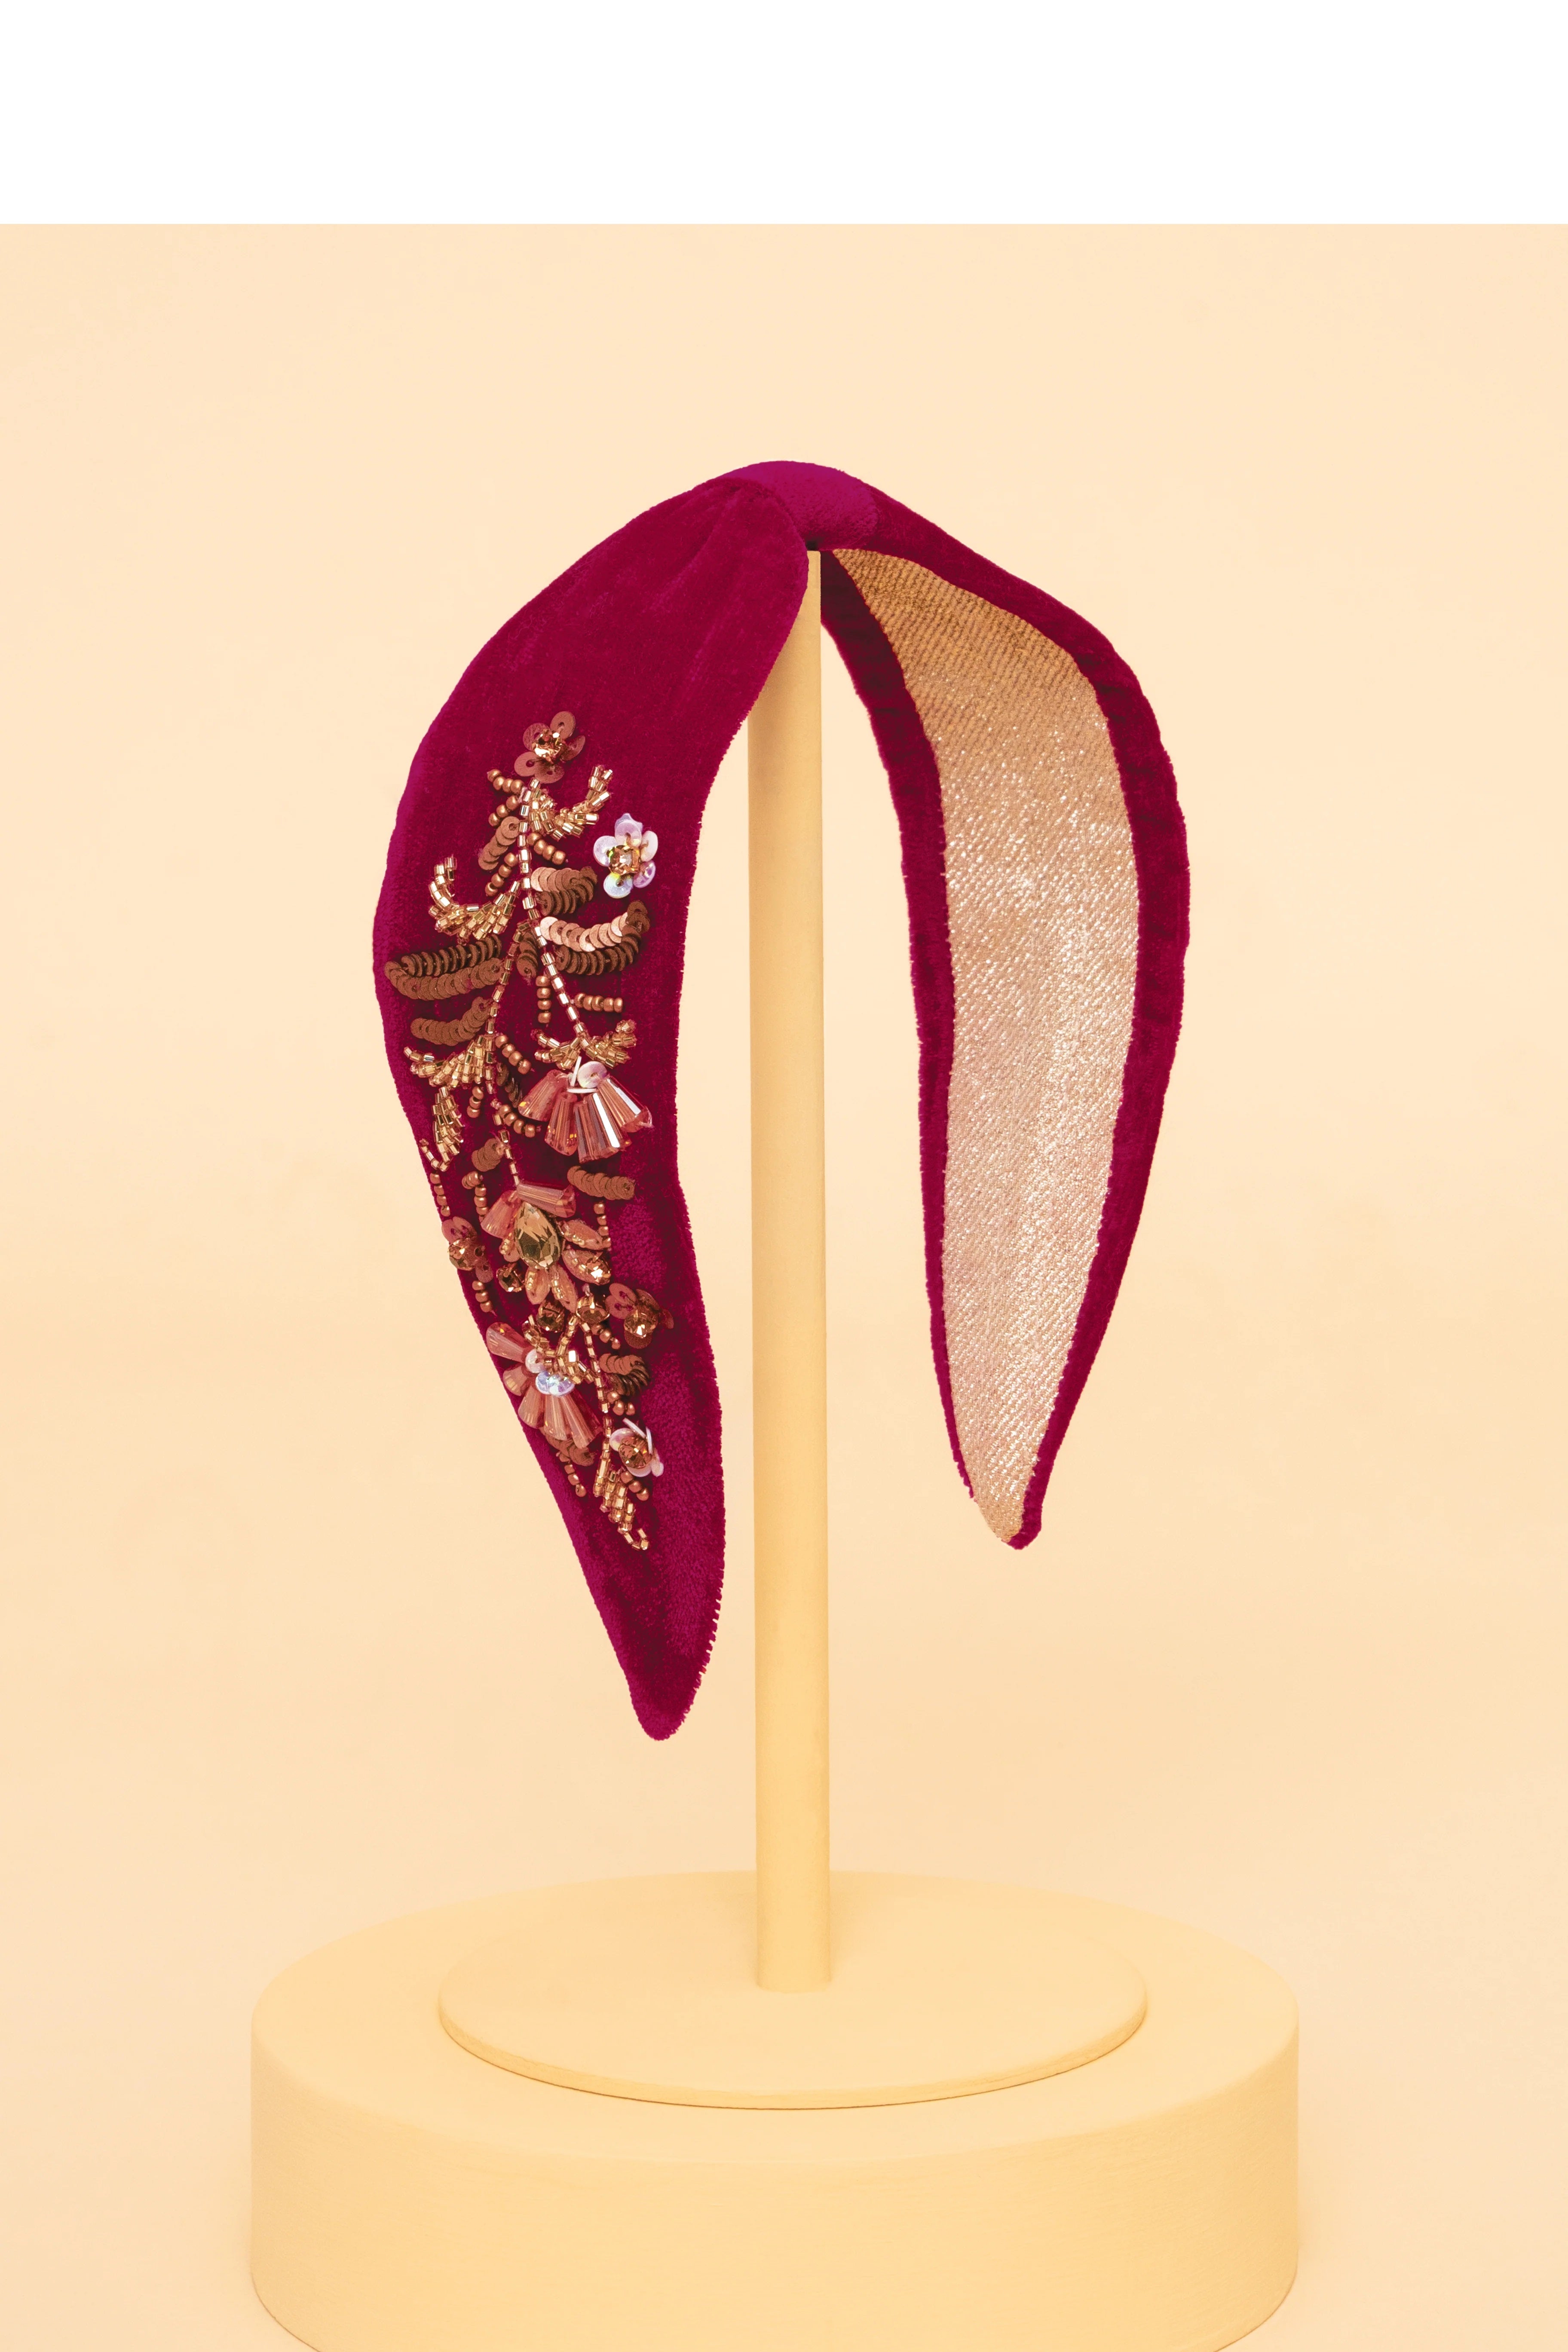 Velvet Embellished Headband - Golden Wildflowers, Fuchsia